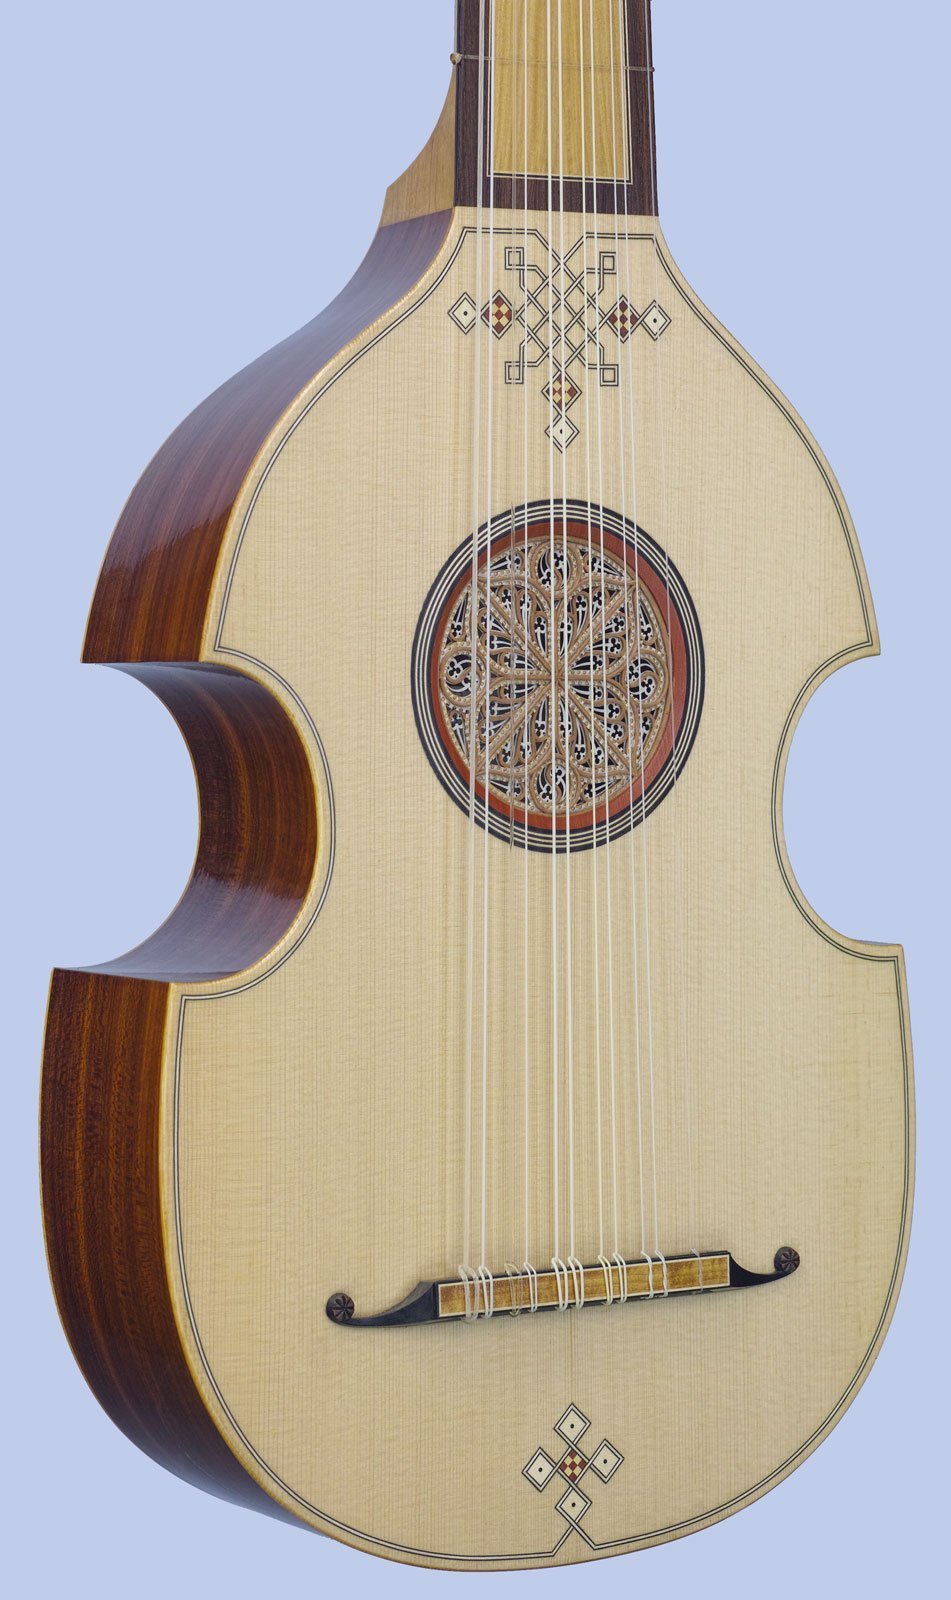 Vihuela, or viola-da-mano, modelled after Girolamo dai Libri painting: soundboard in perspective view